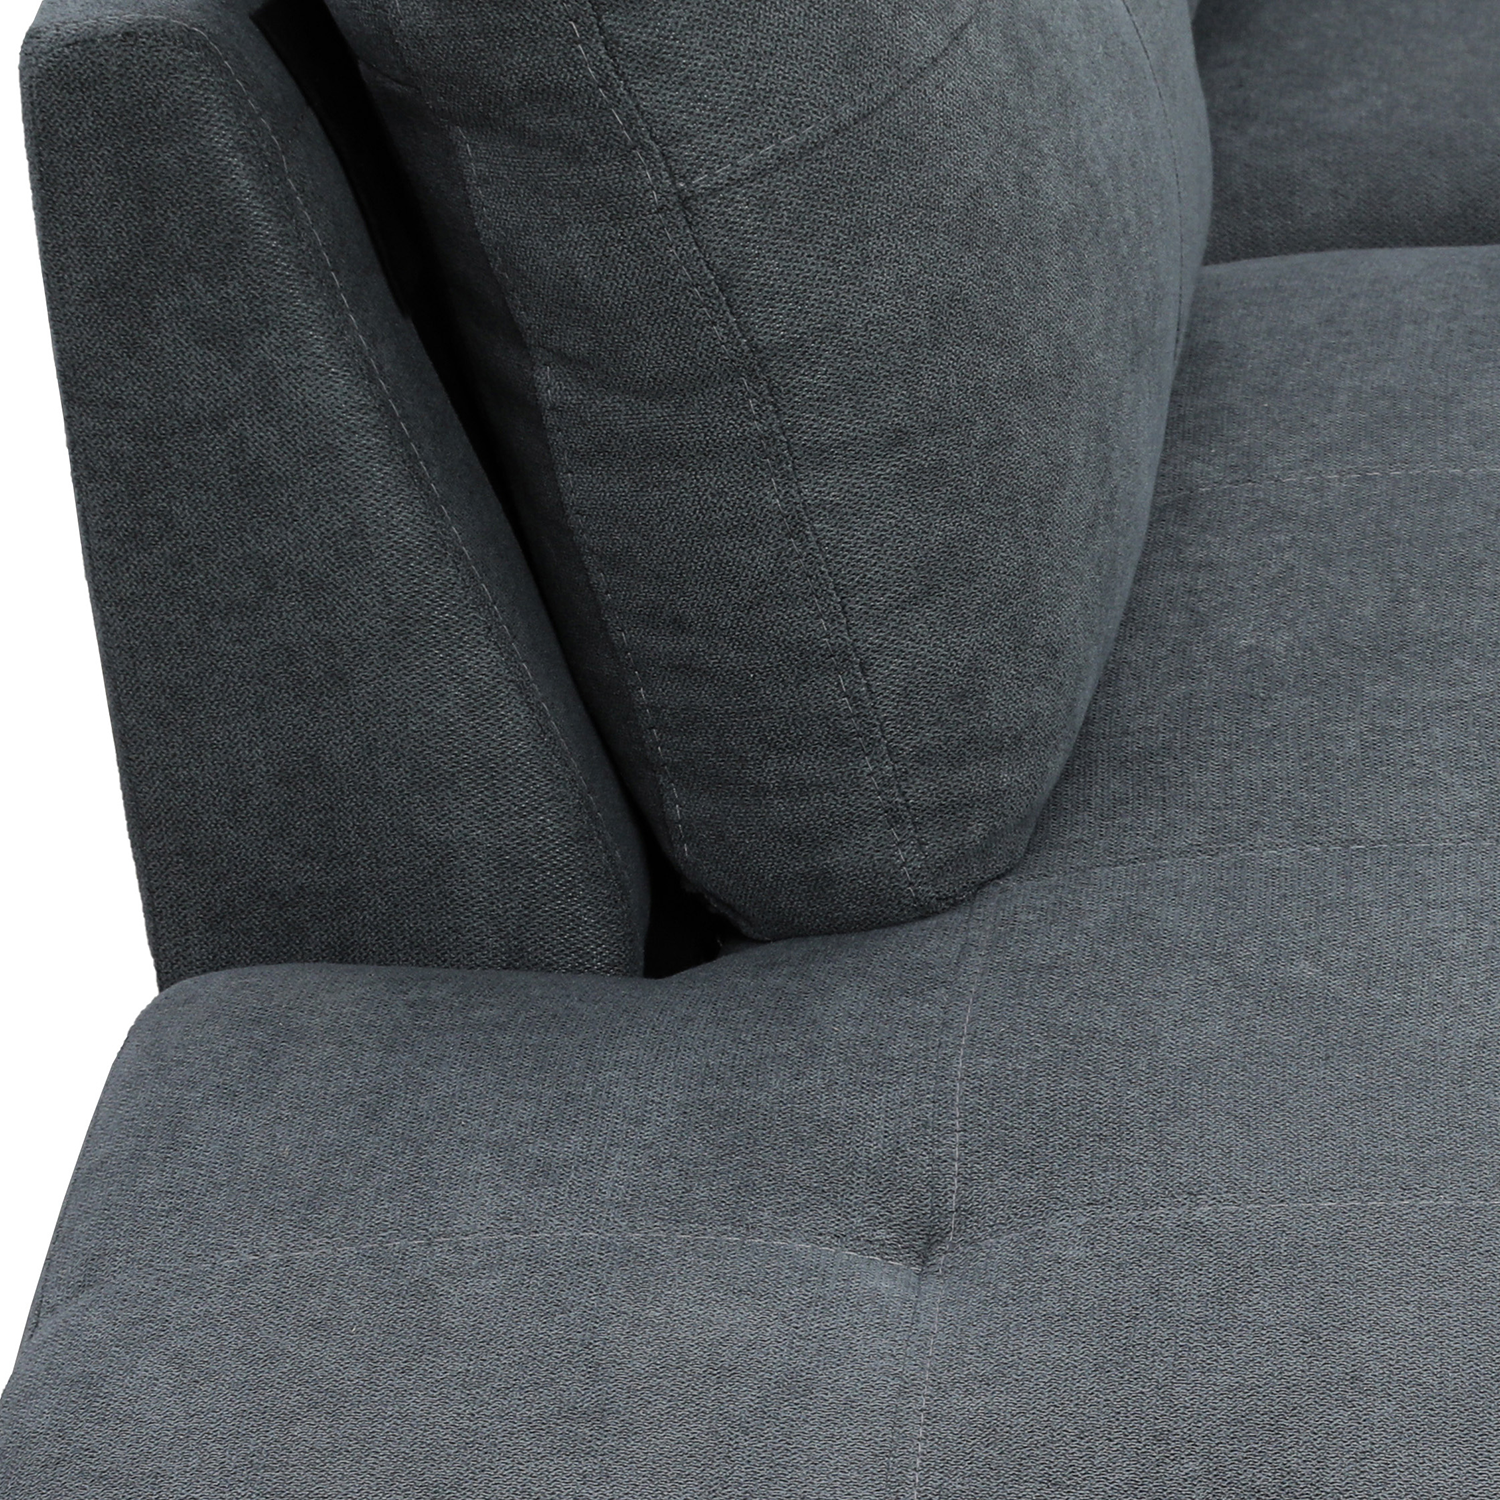 Ainehome Dark Gray L-Shape Flannel Sofa Set